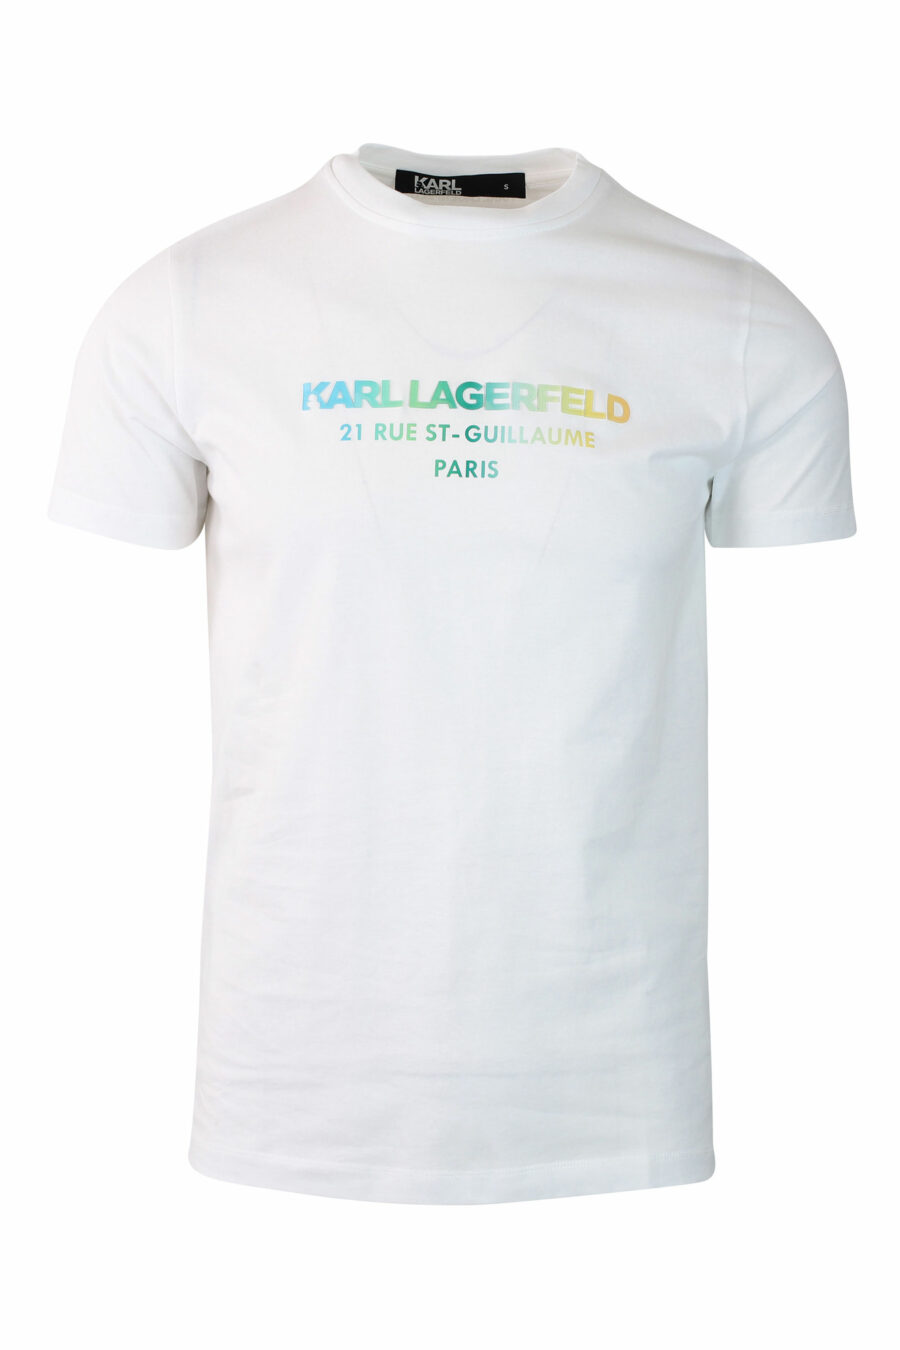 Camiseta blanca con logo holográfico "rue st guillaume" - IMG 0115